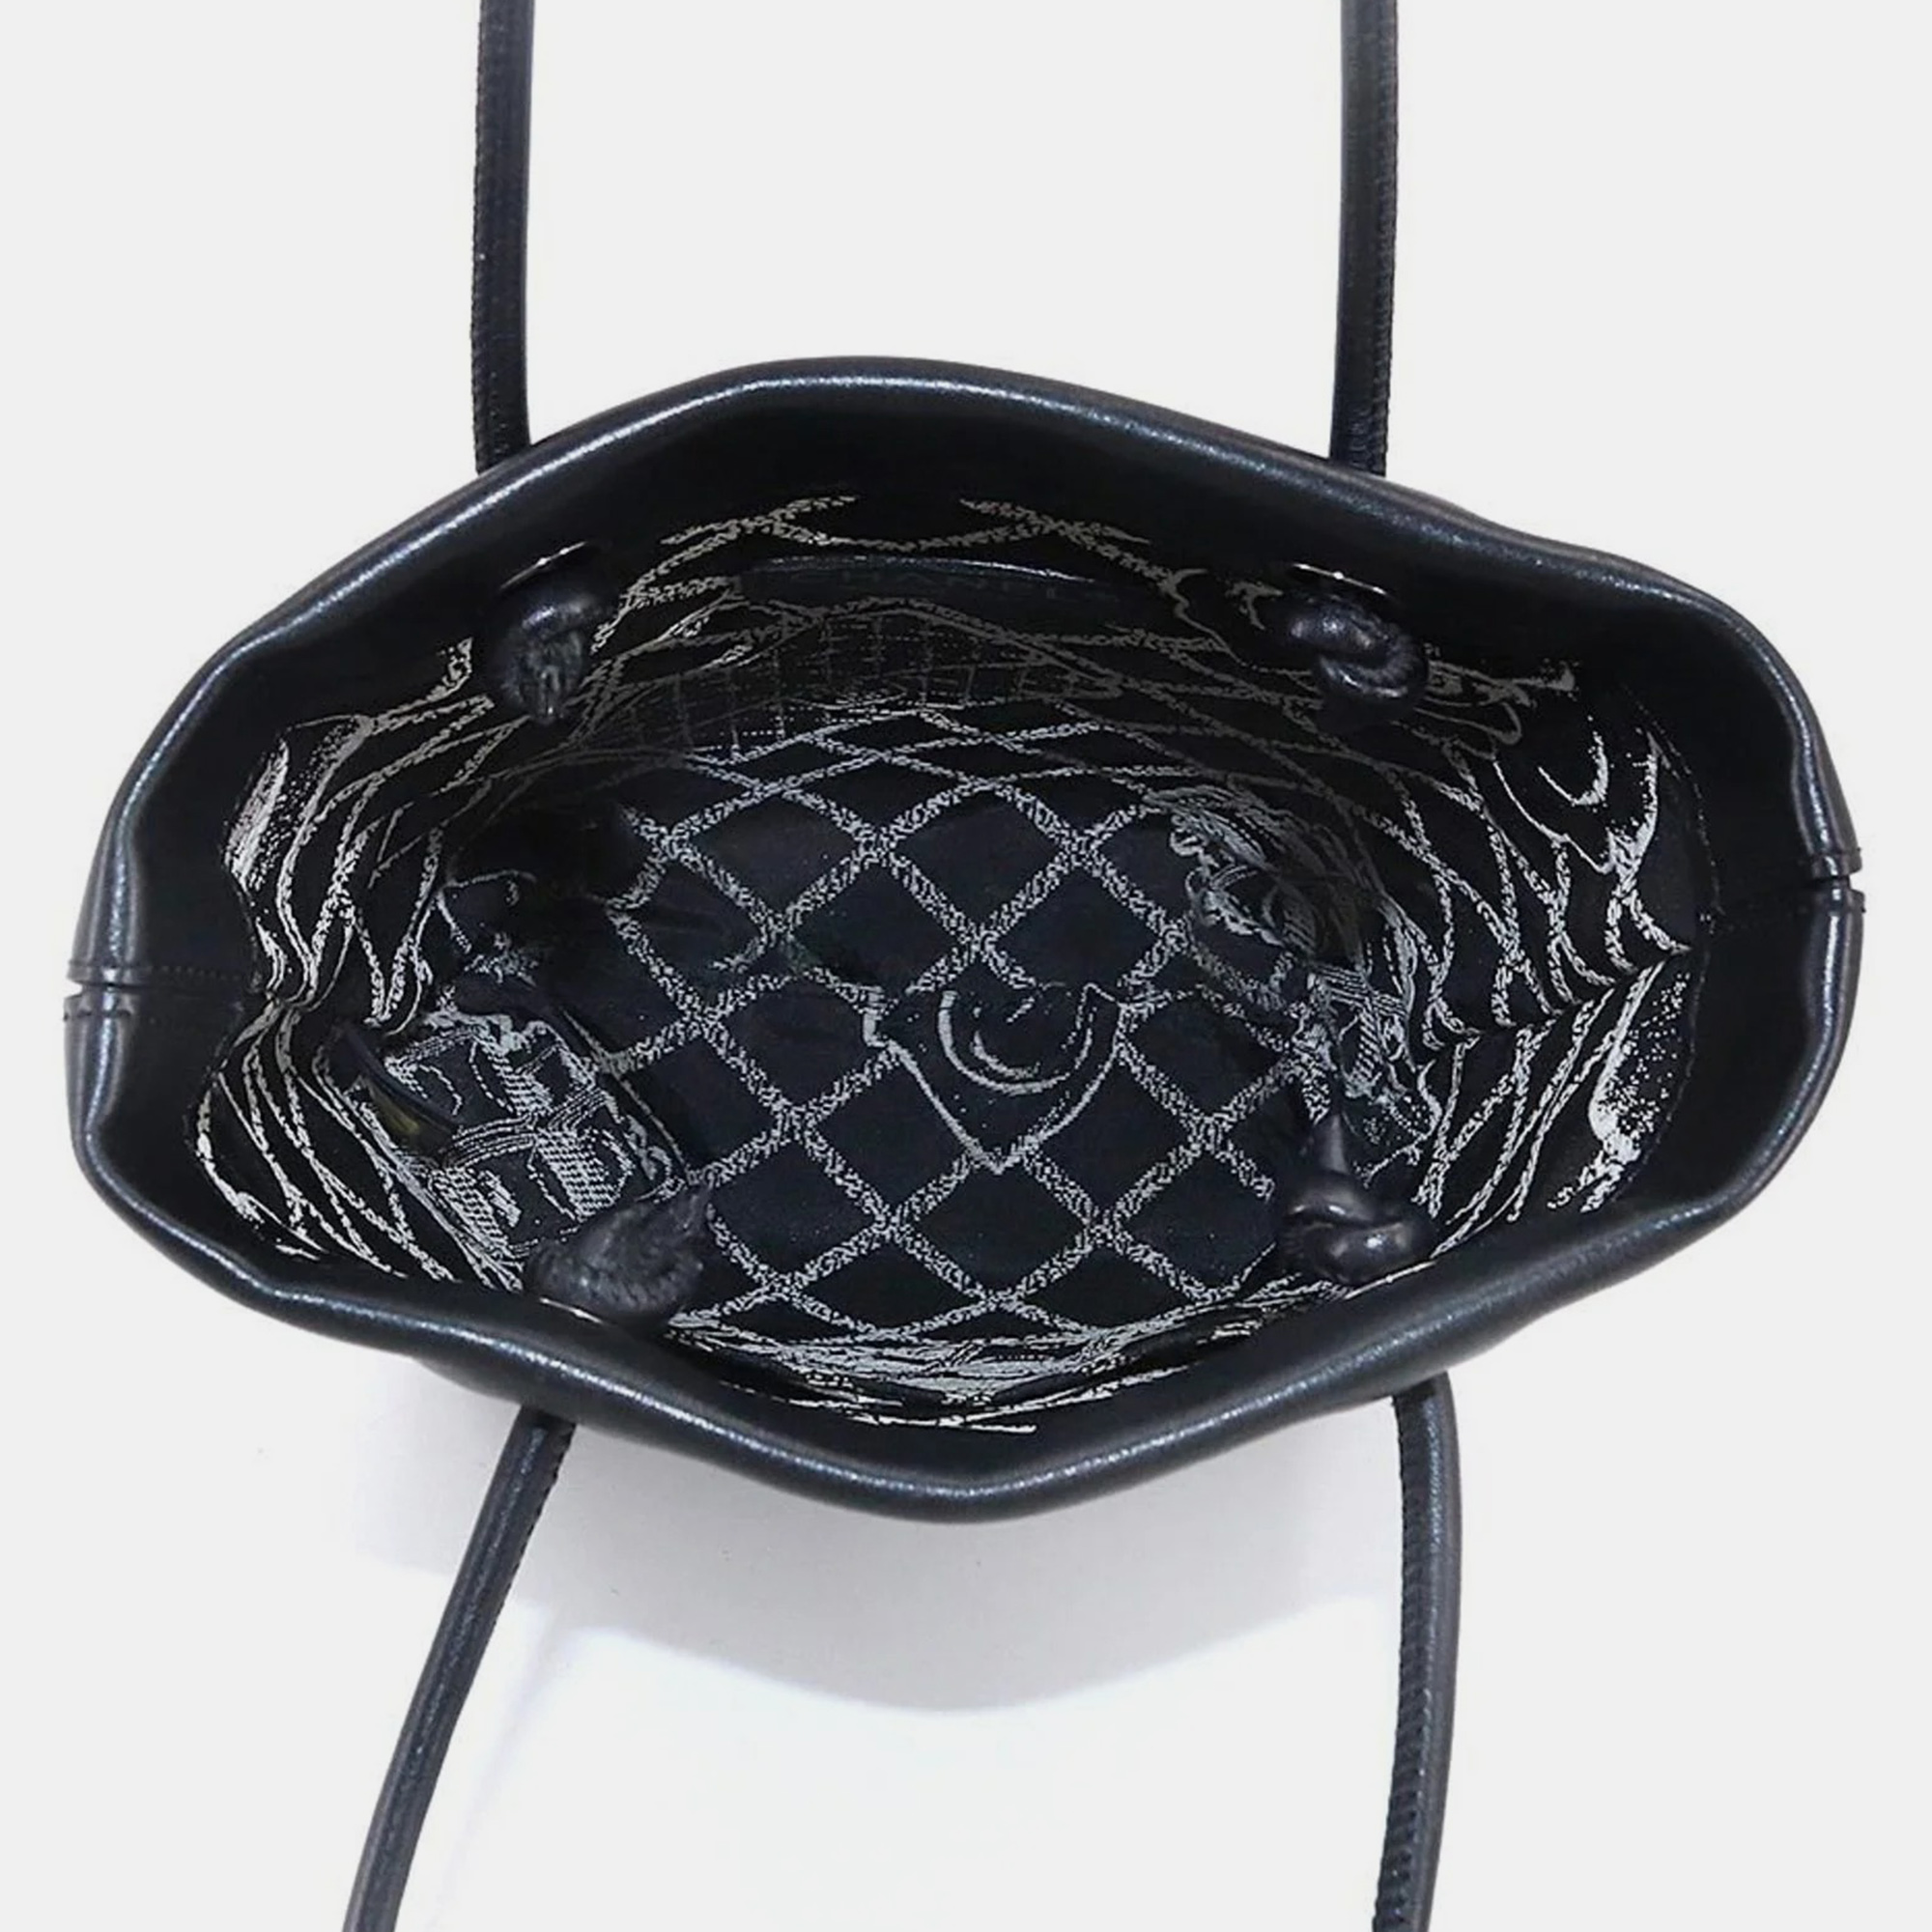 Chanel Black Leather Essential Shopper Tote Bag